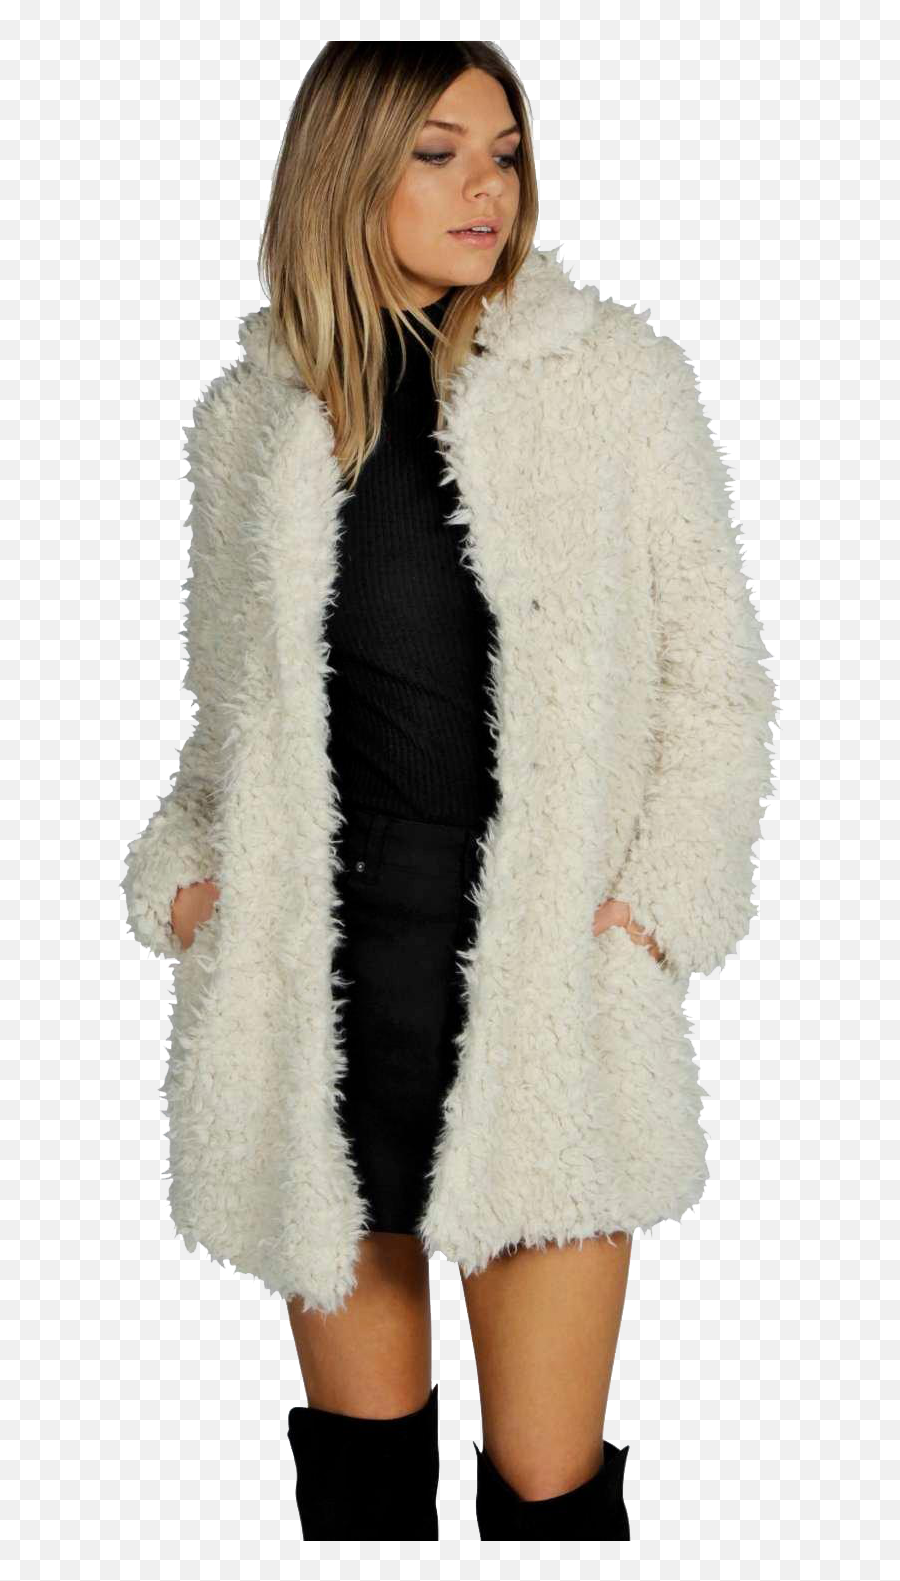 Faux Fur Coat Png Image For Free Download White Fur Coat Png Furry Png Free Transparent Png Images Pngaaa Com - roblox white fur coat